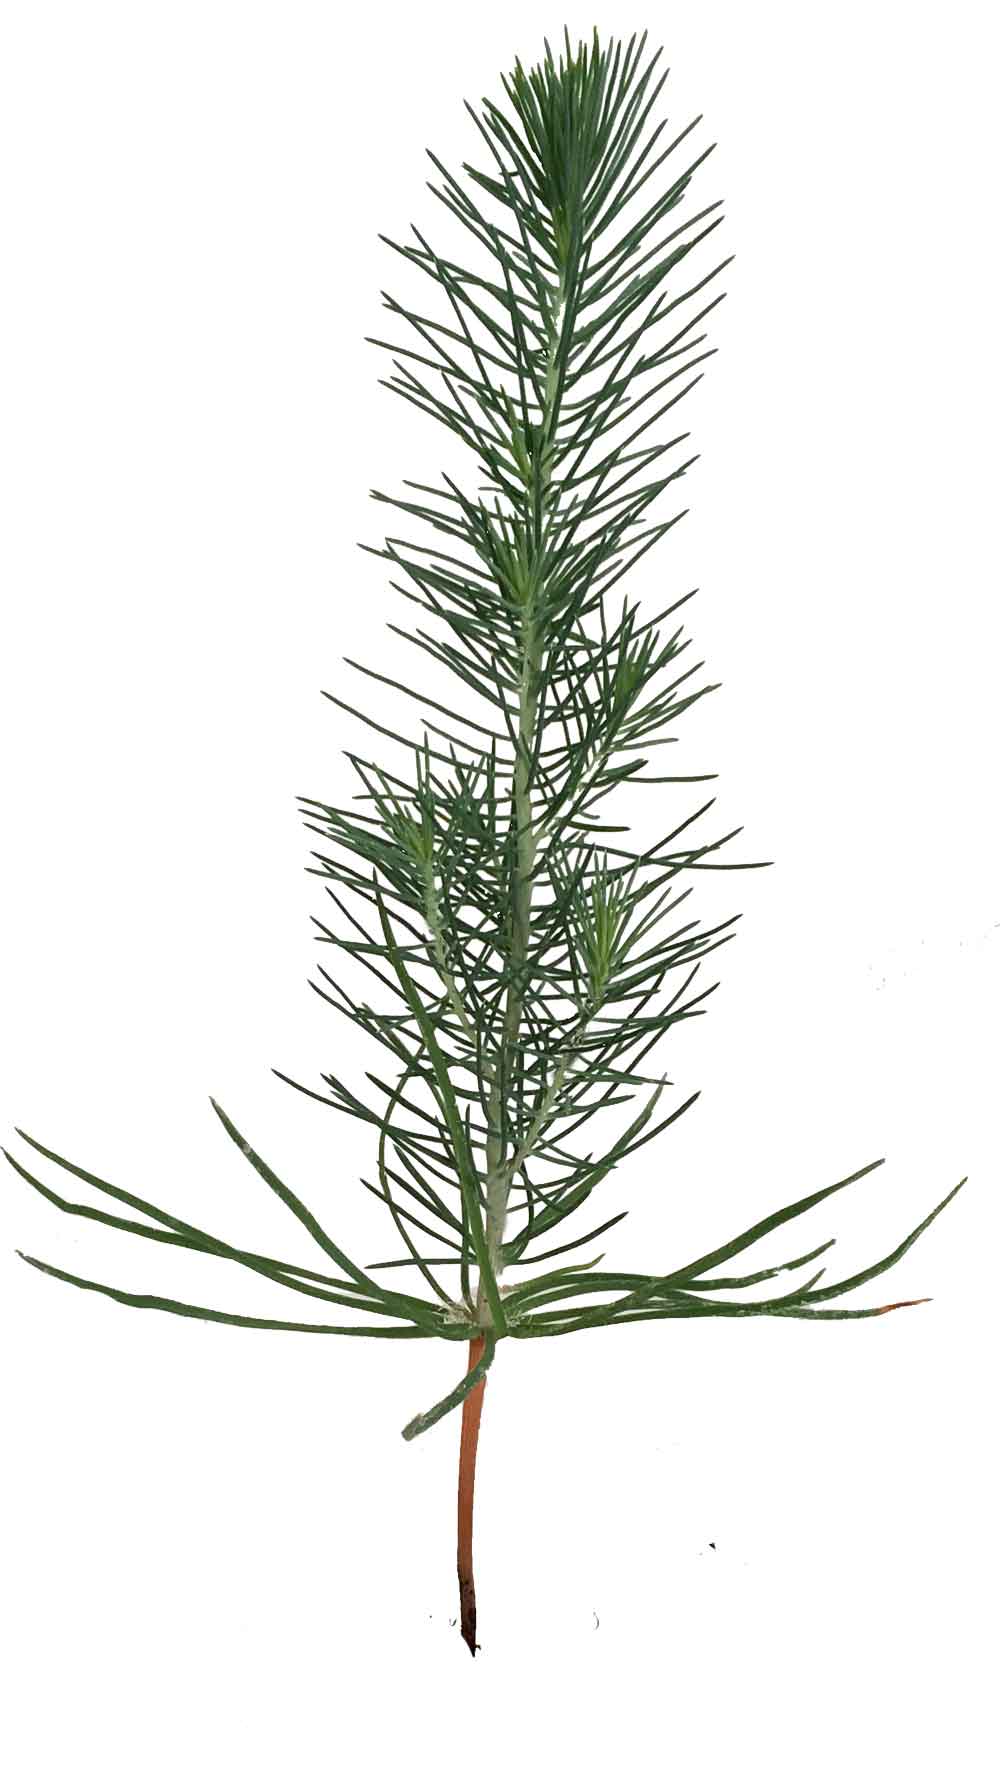 Pinus pinea x Tuber borchii